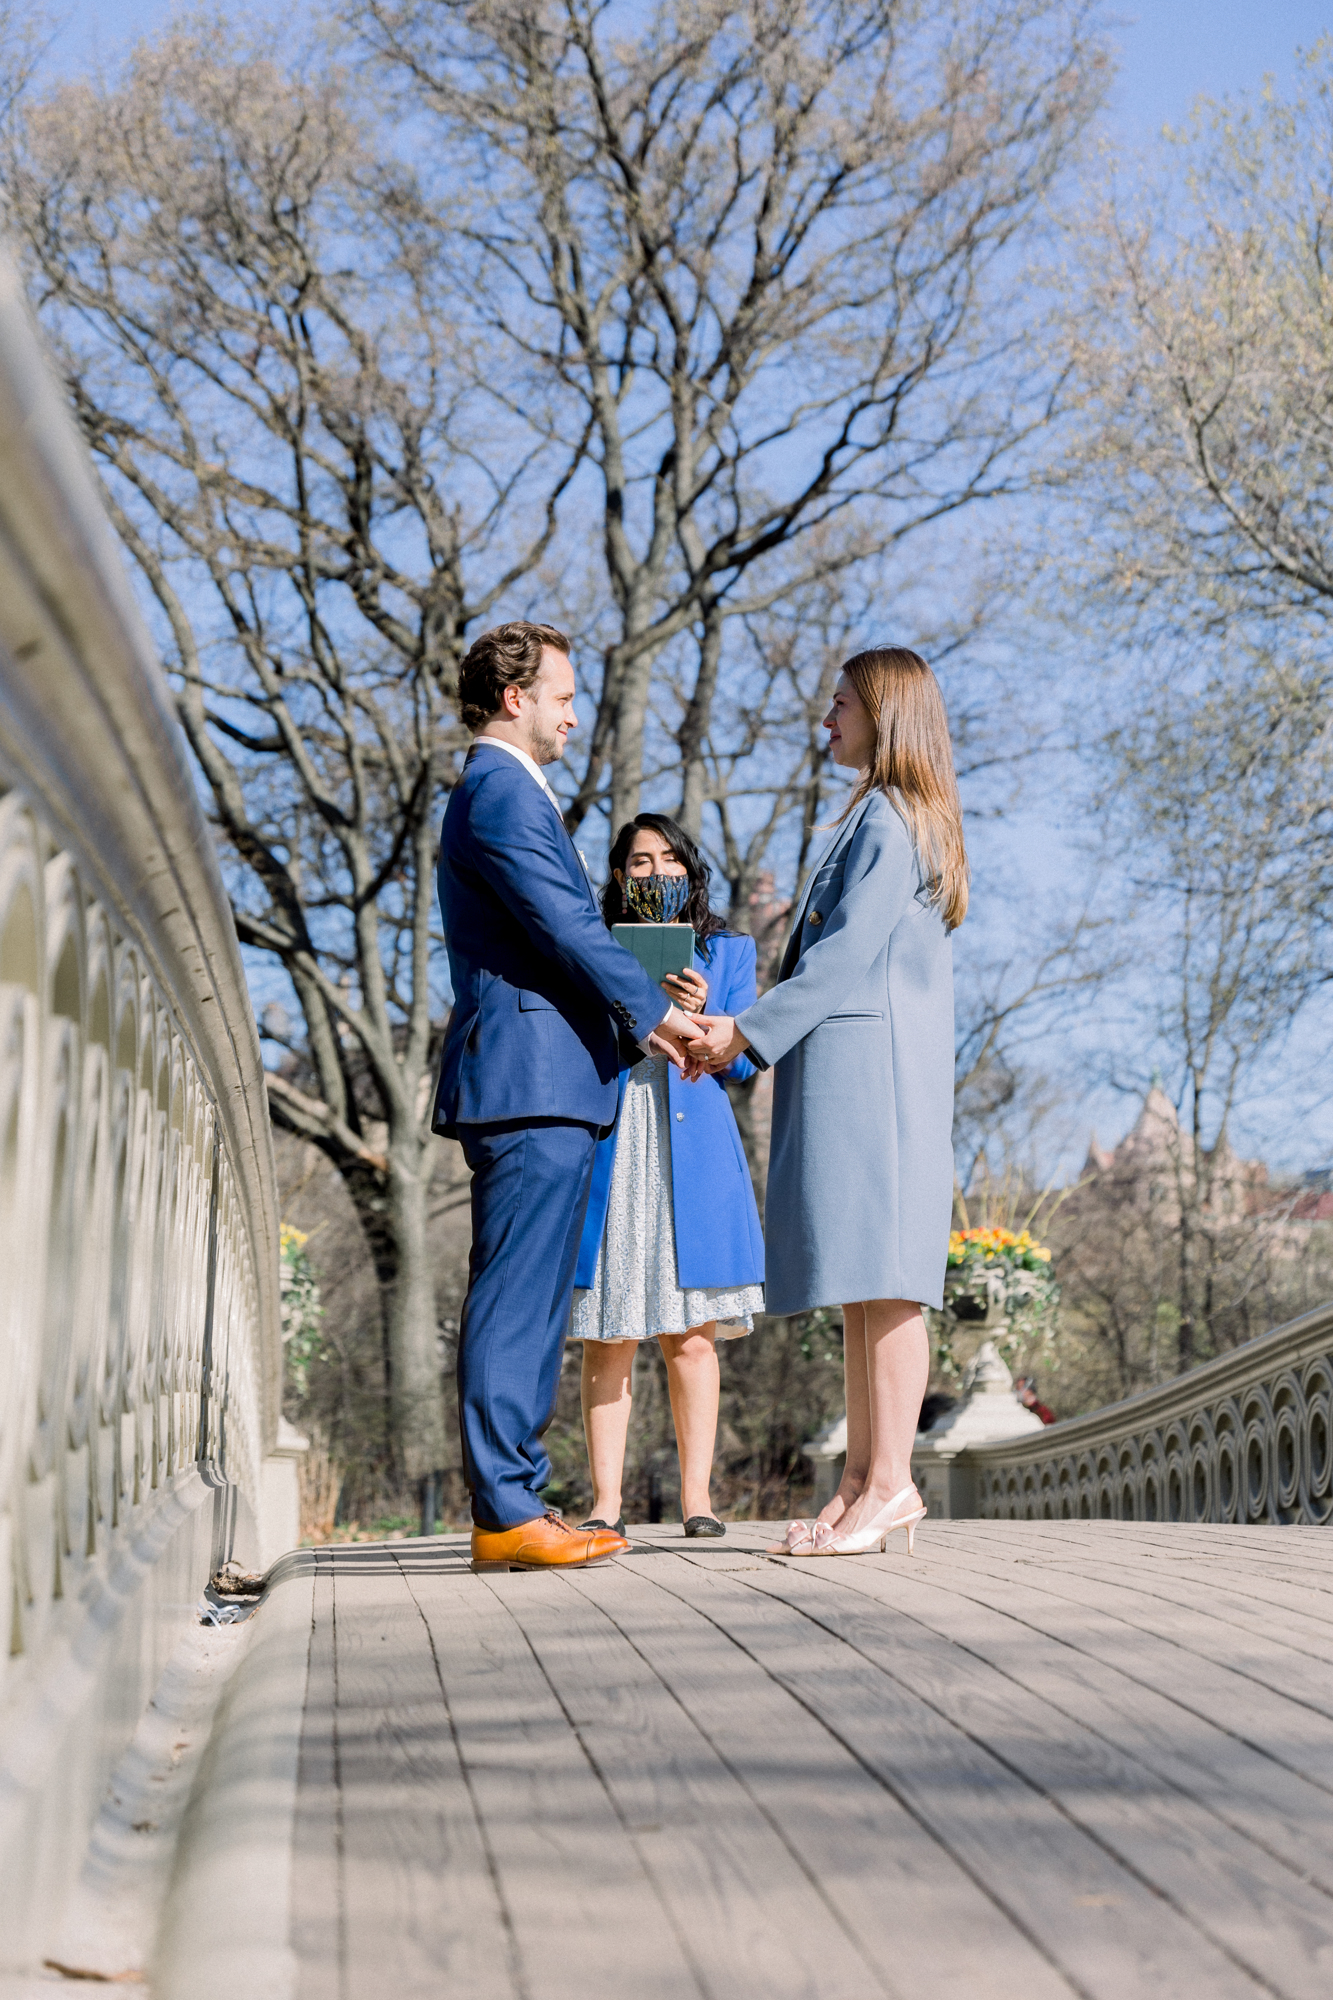 Vivid Bow Bridge Wedding Photos Among Central Park's Spring Cherry Blossoms